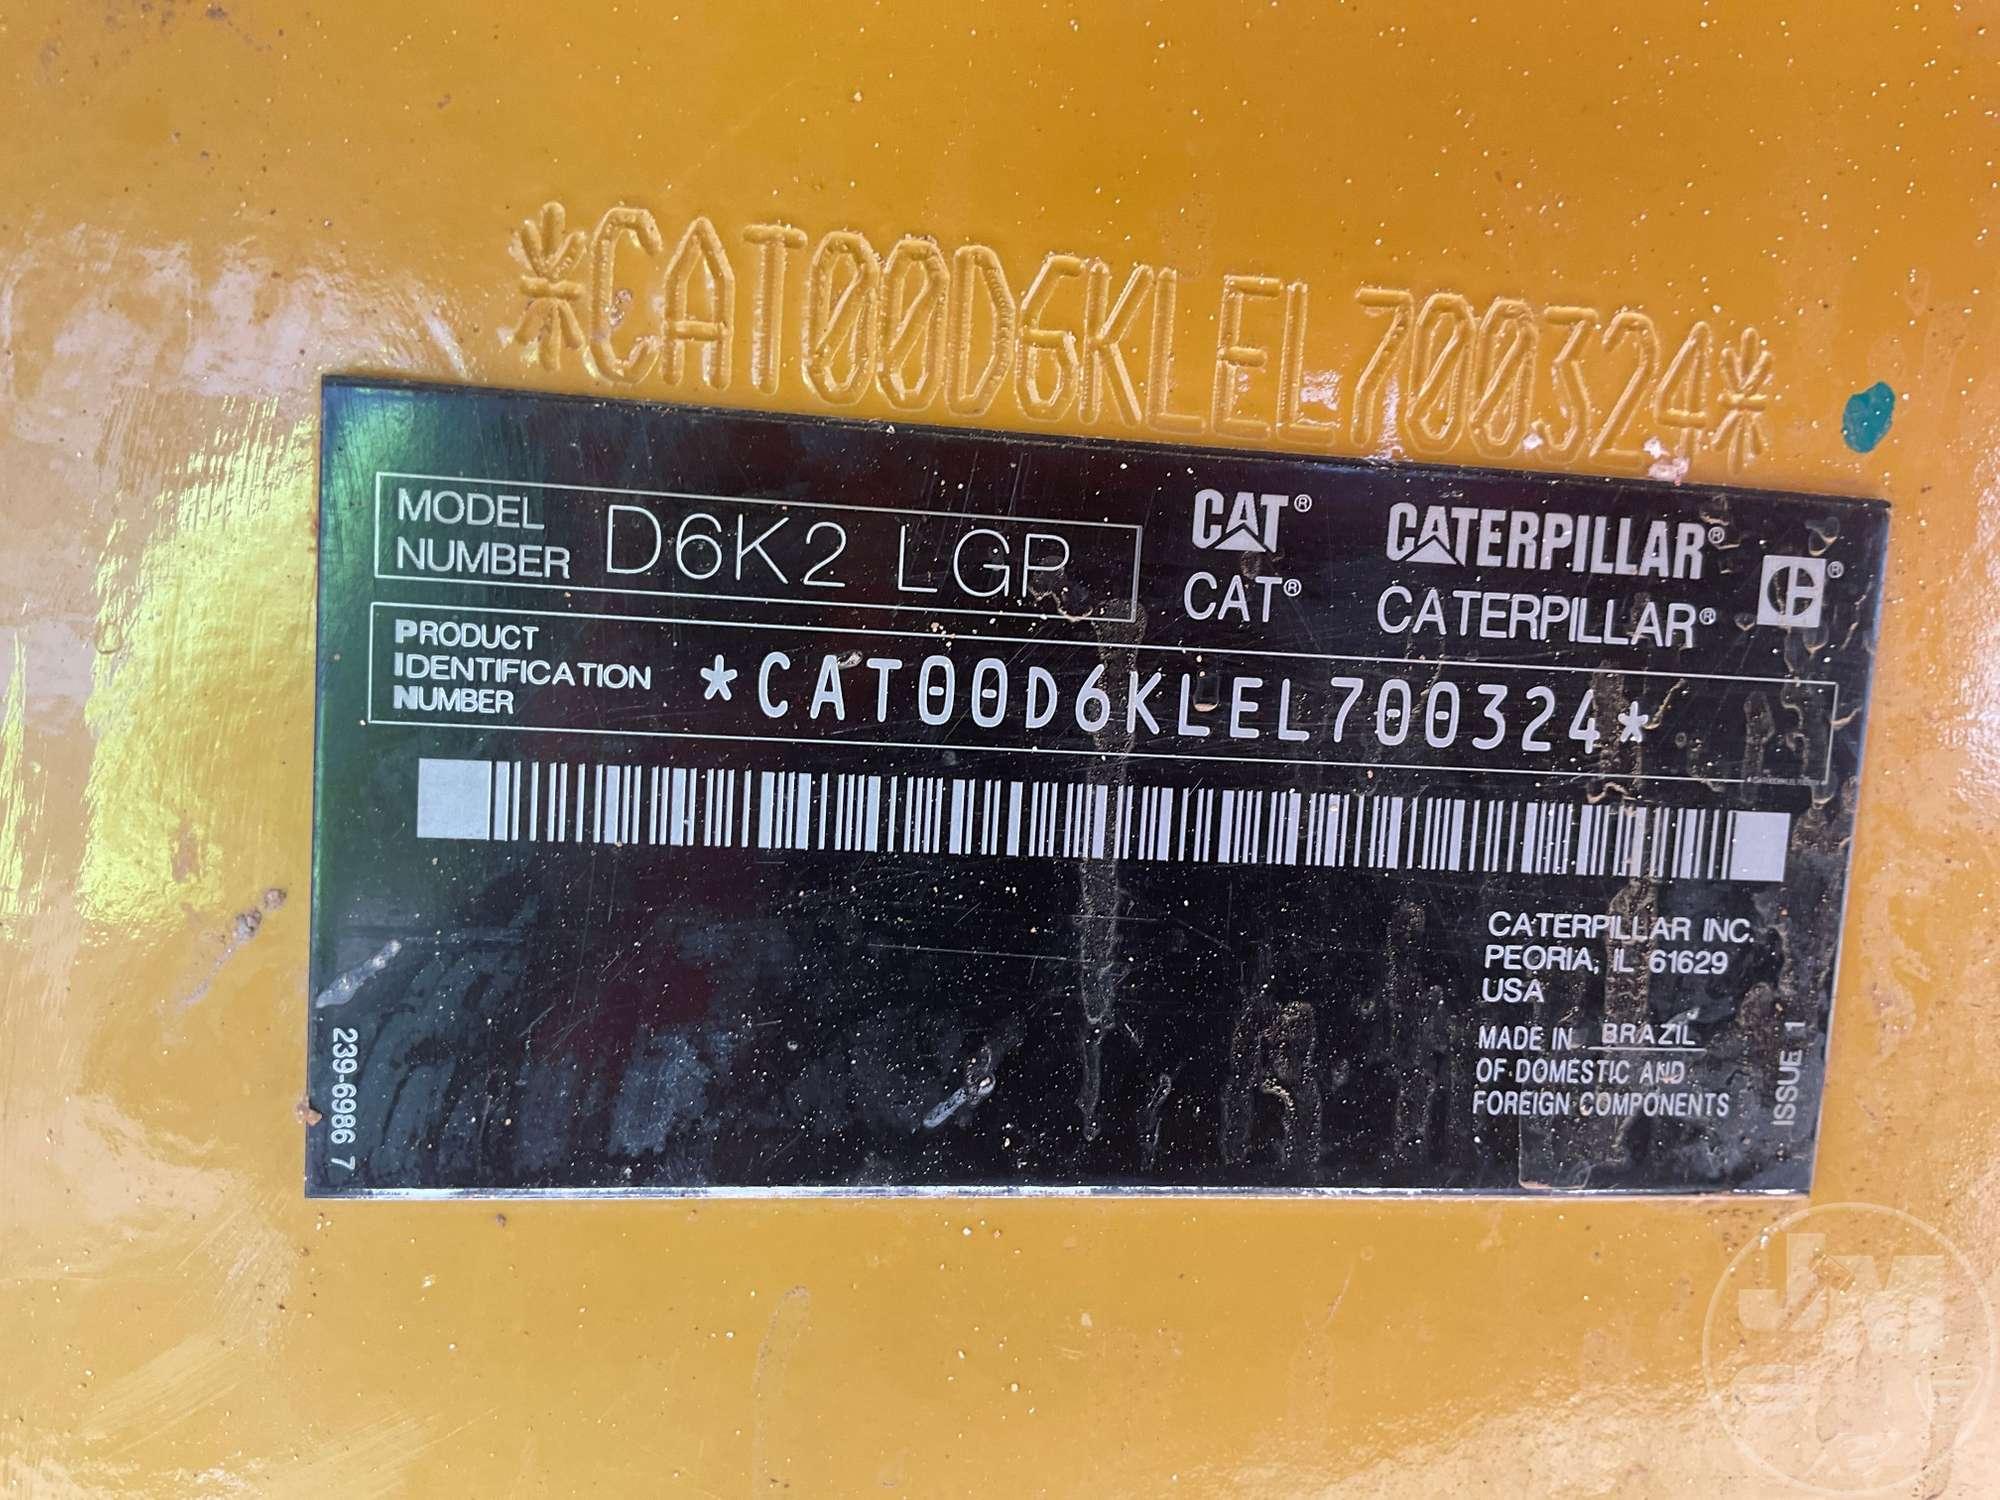 2018 CATERPILLAR D6K2 LGP CRAWLER TRACTOR SN: CAT00D6KLEL700324